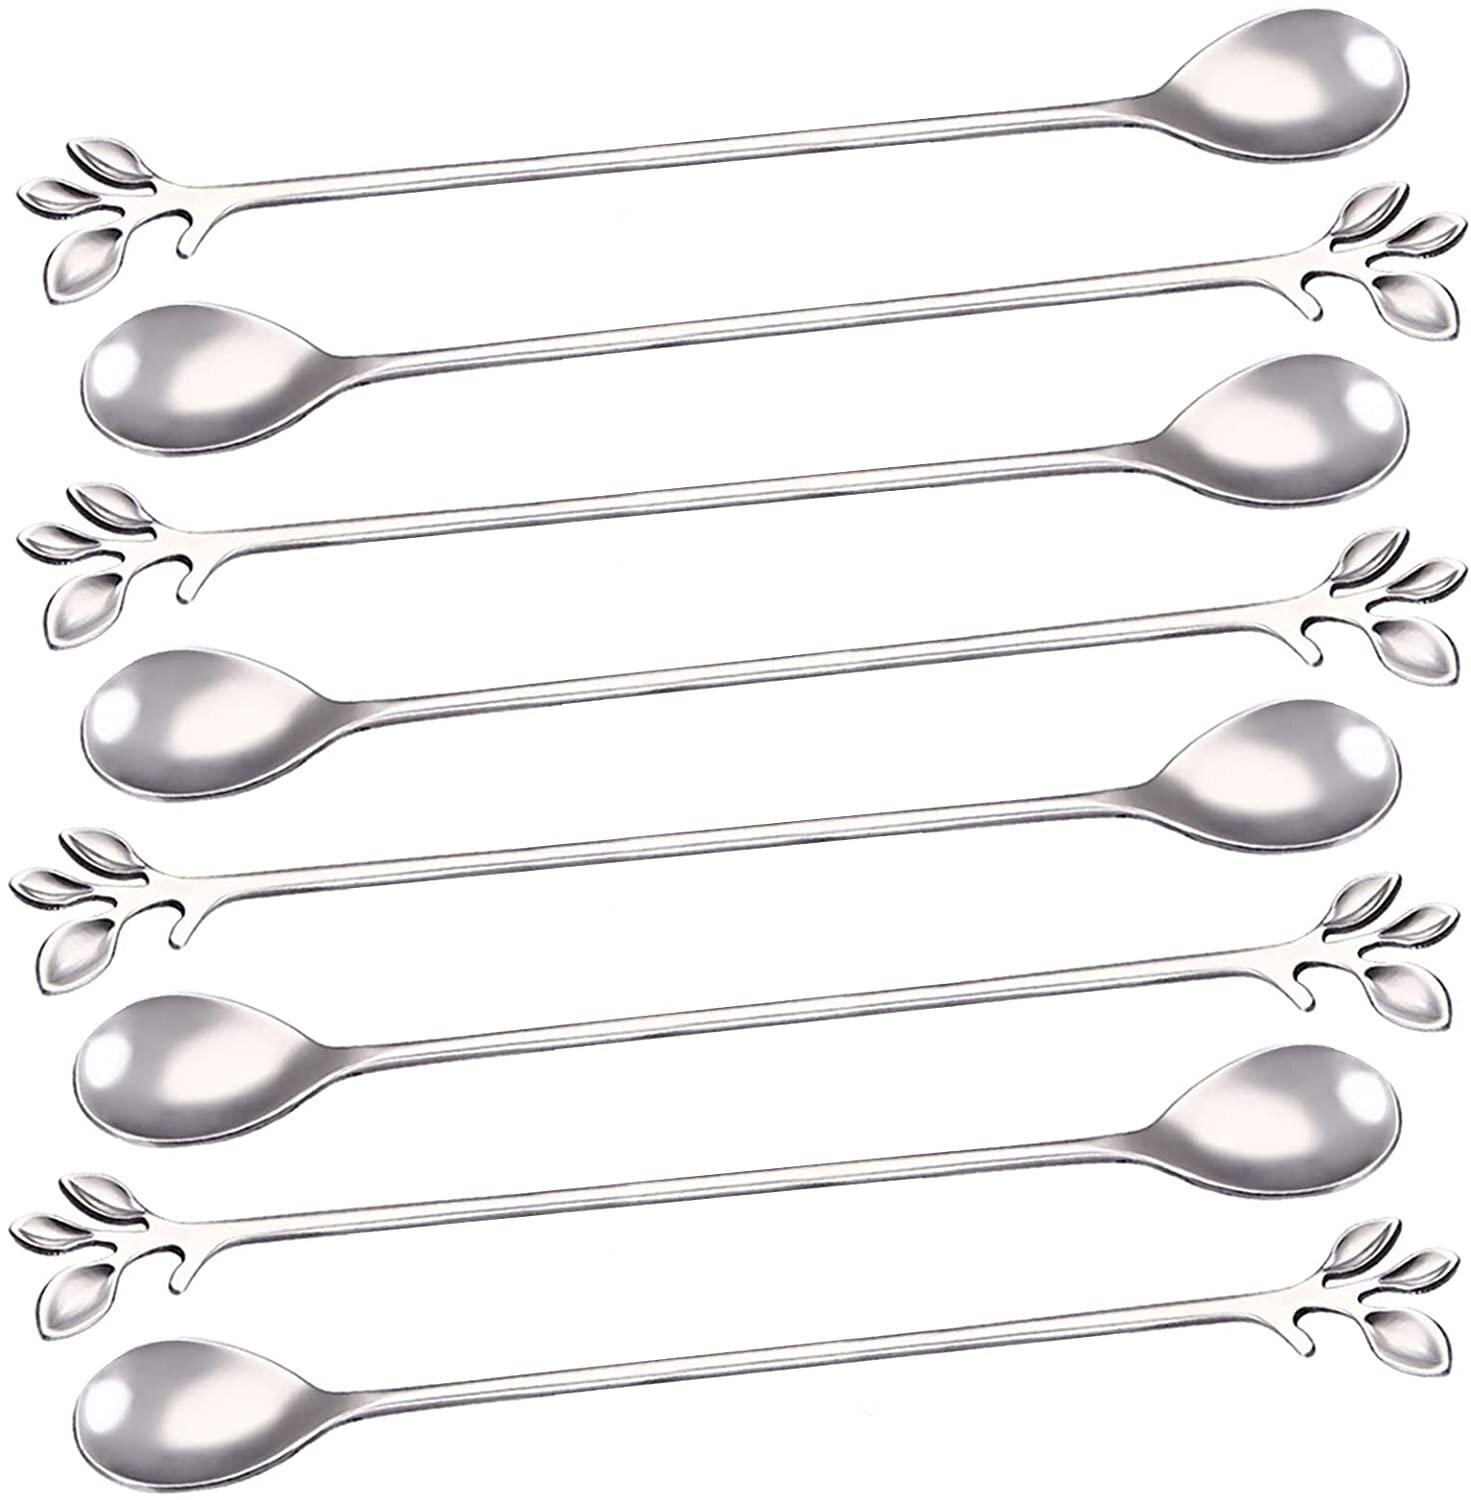 8pcs Spoon Long Handle Dessert Tea Coffee Mixing Spoon Stainless Steel US 